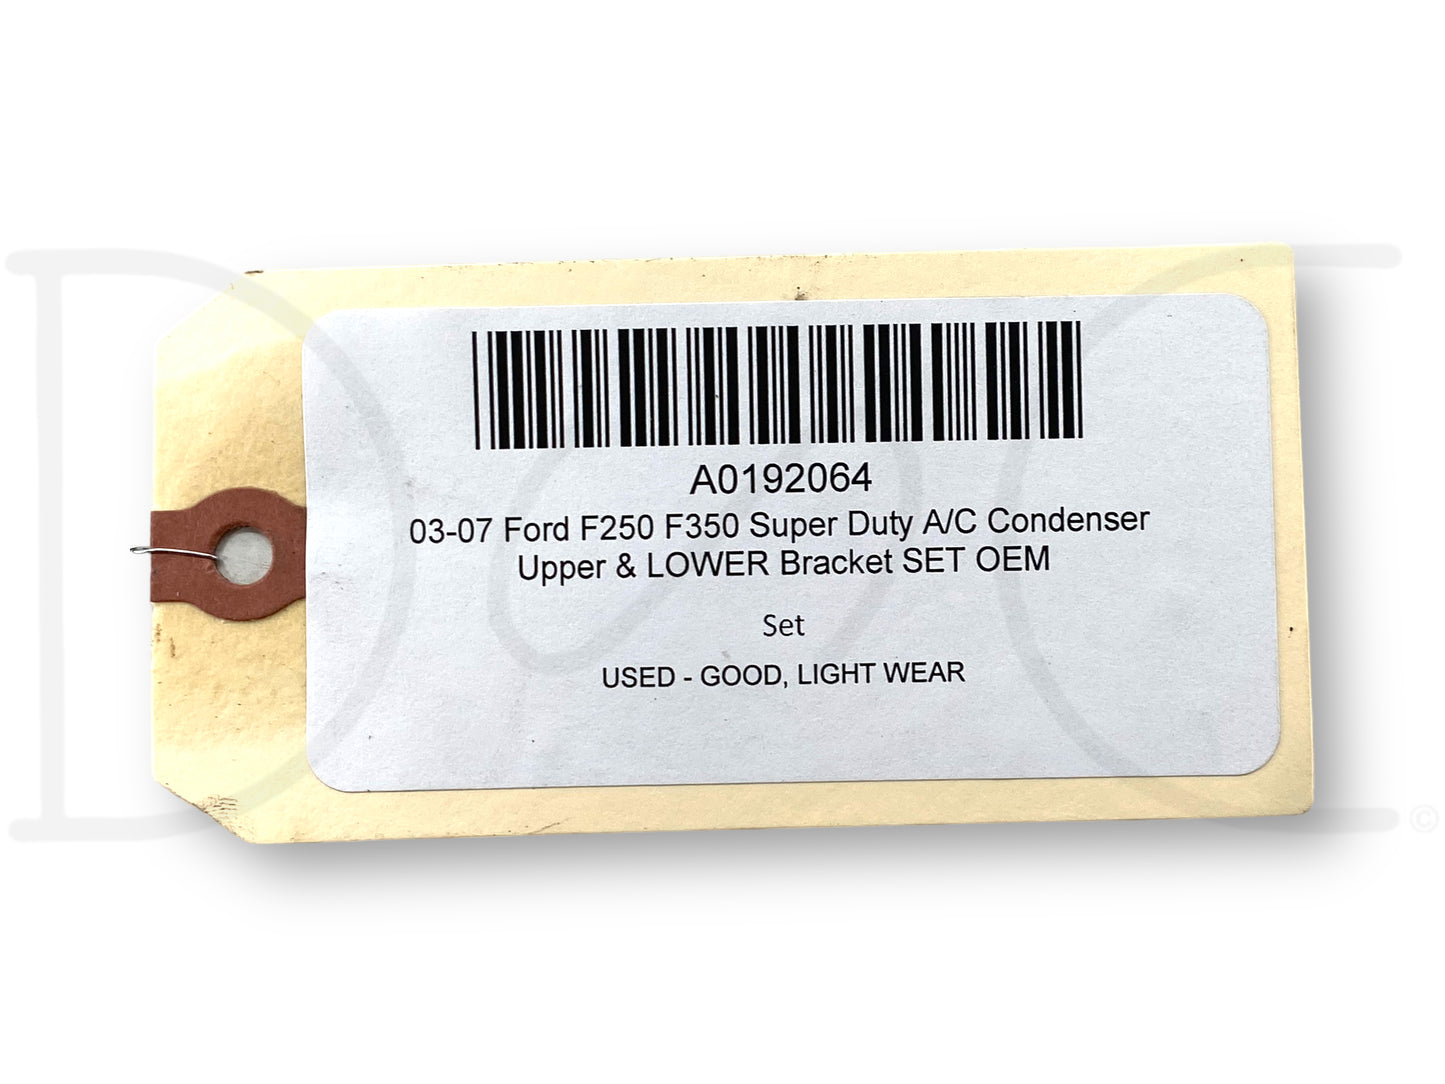 03-07 Ford F250 F350 Super Duty A/C Condenser Upper & Lower Bracket Set OEM